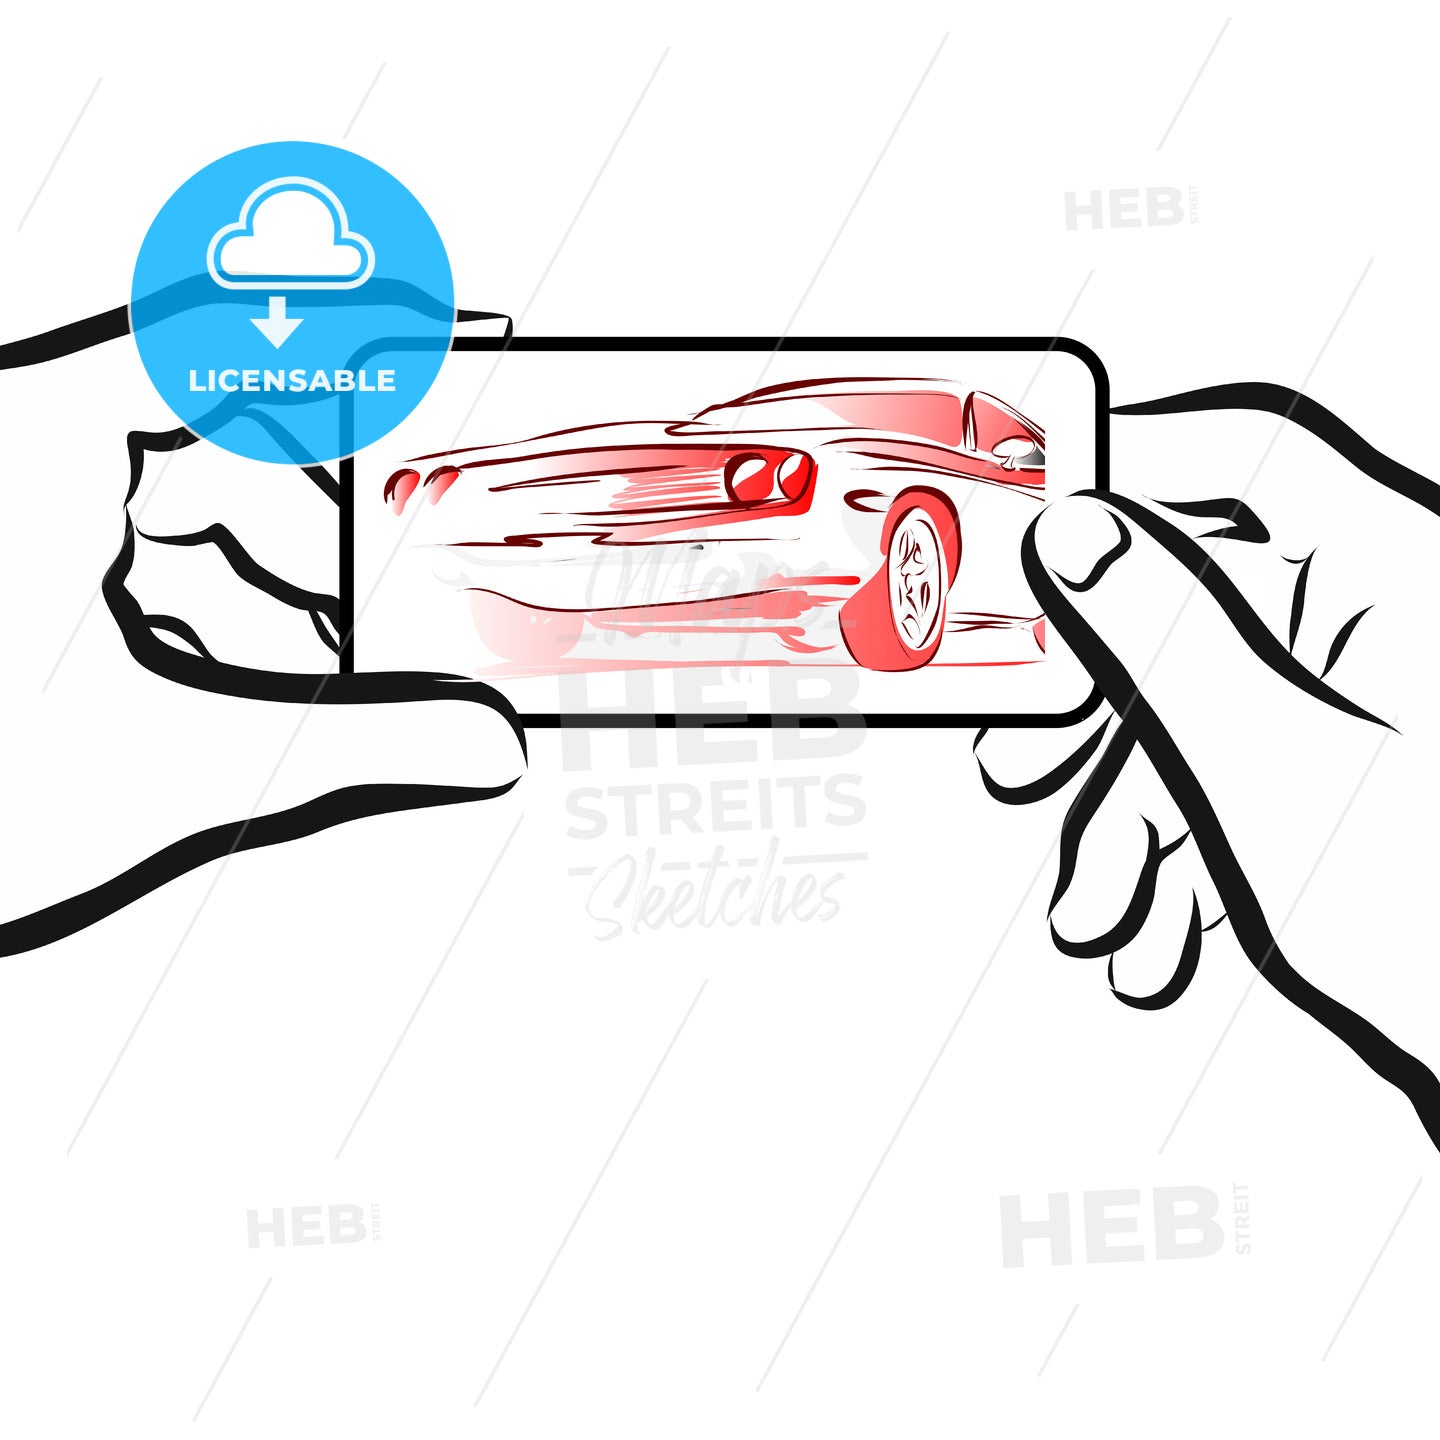 Car Rental App Concept Sketch with Smartphone in Hands – instant download